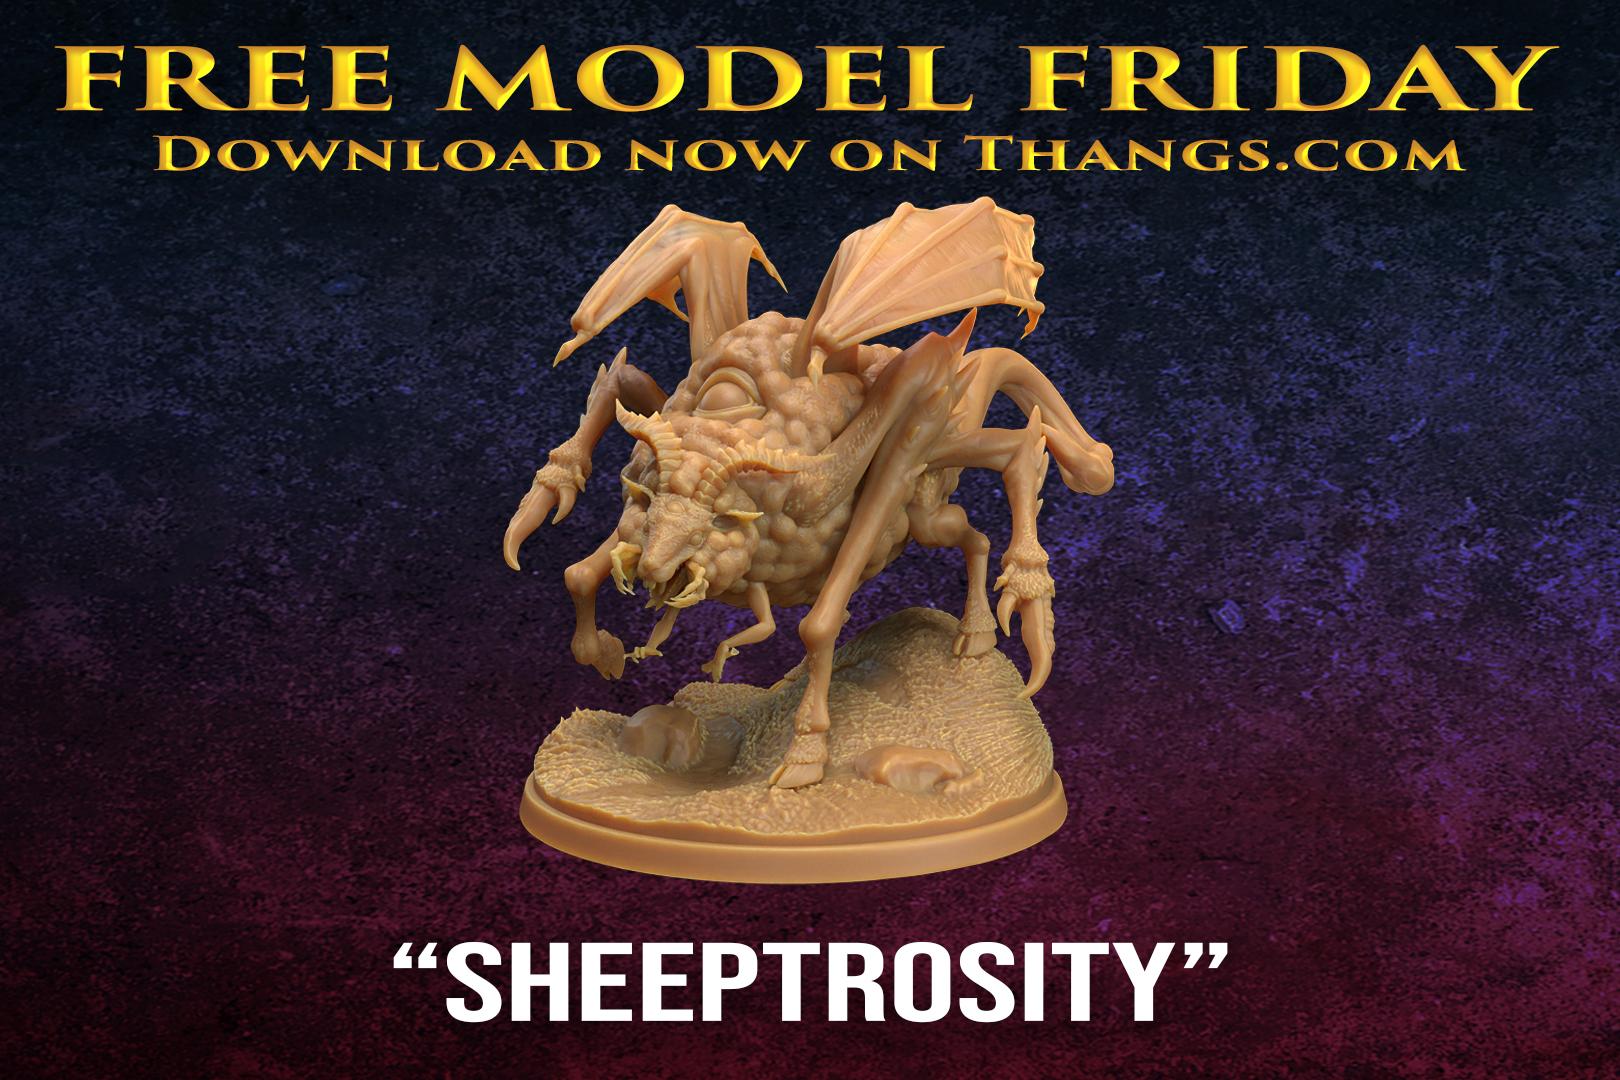 Free Model Friday - Sheeptrosity